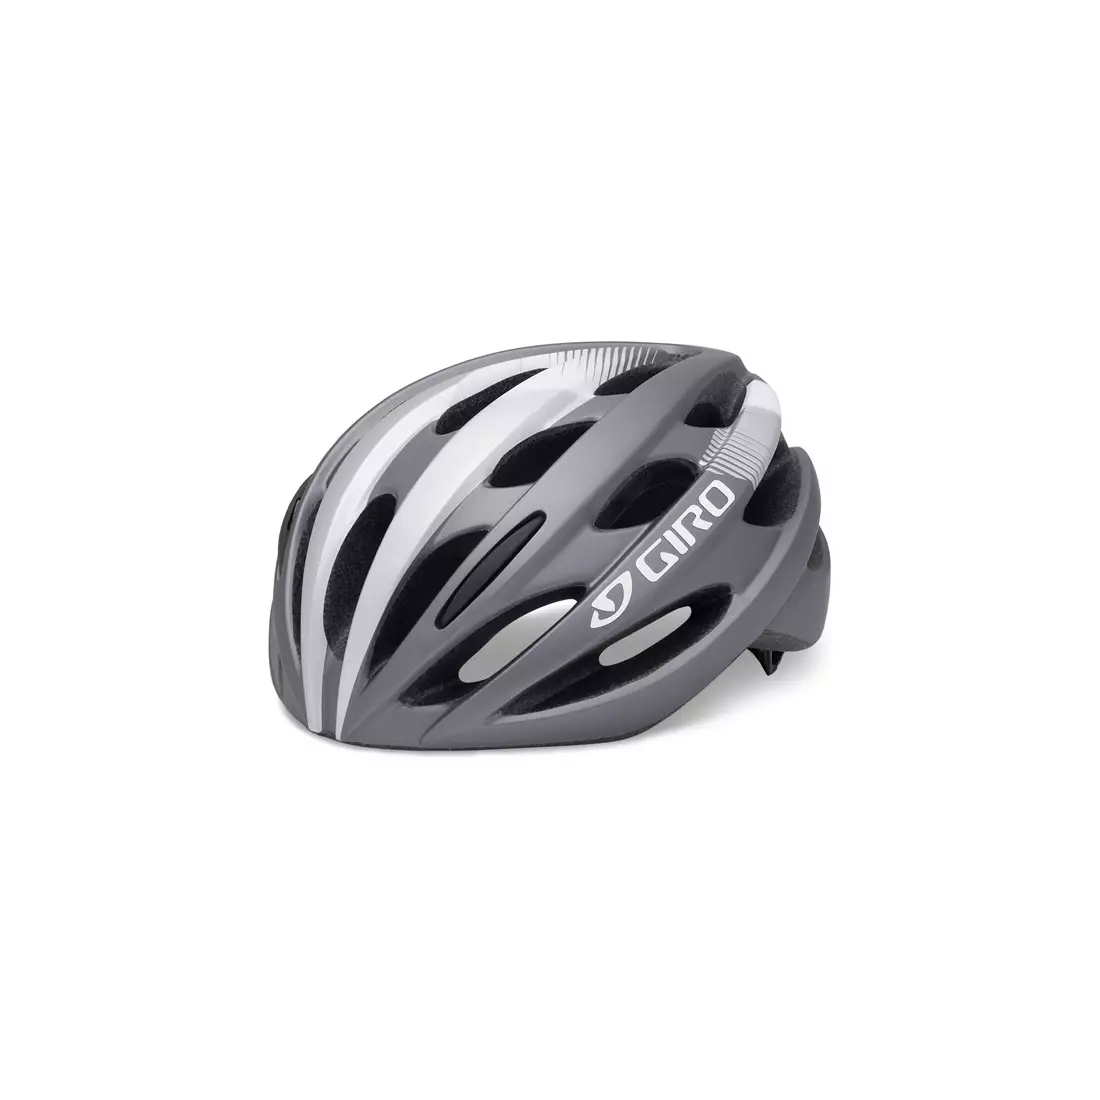 GIRO TRINITY titanium and silver bicycle helmet